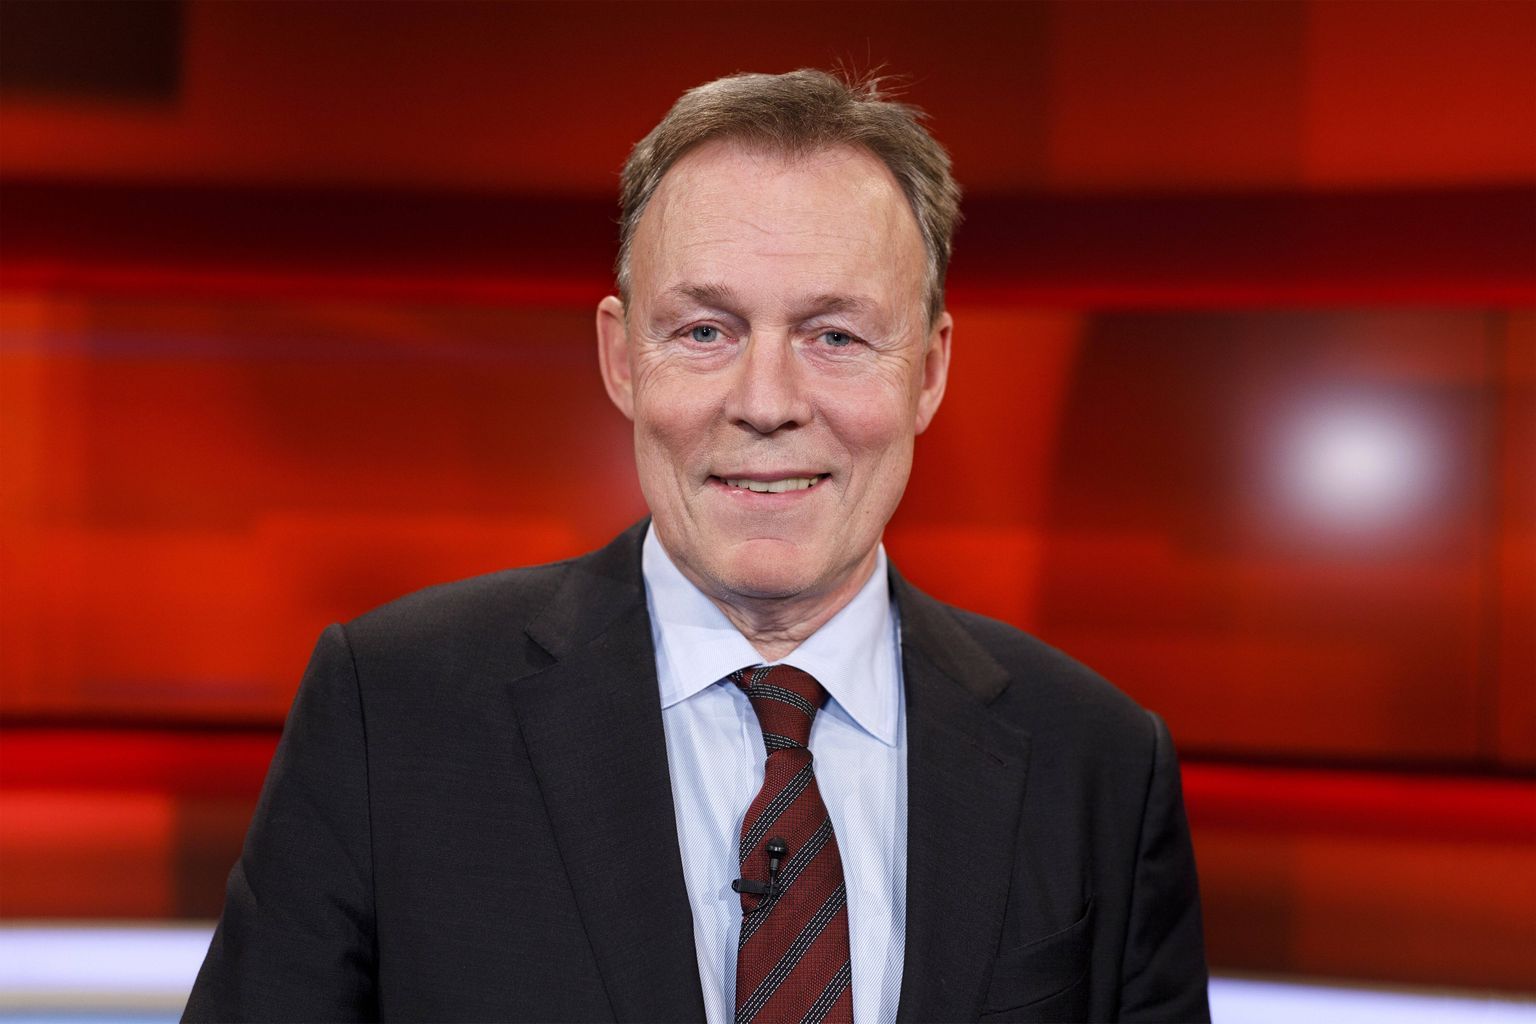 Thomas Oppermann esinemas 10. oktoobril 2020 Kölnis WDR telekanali saates